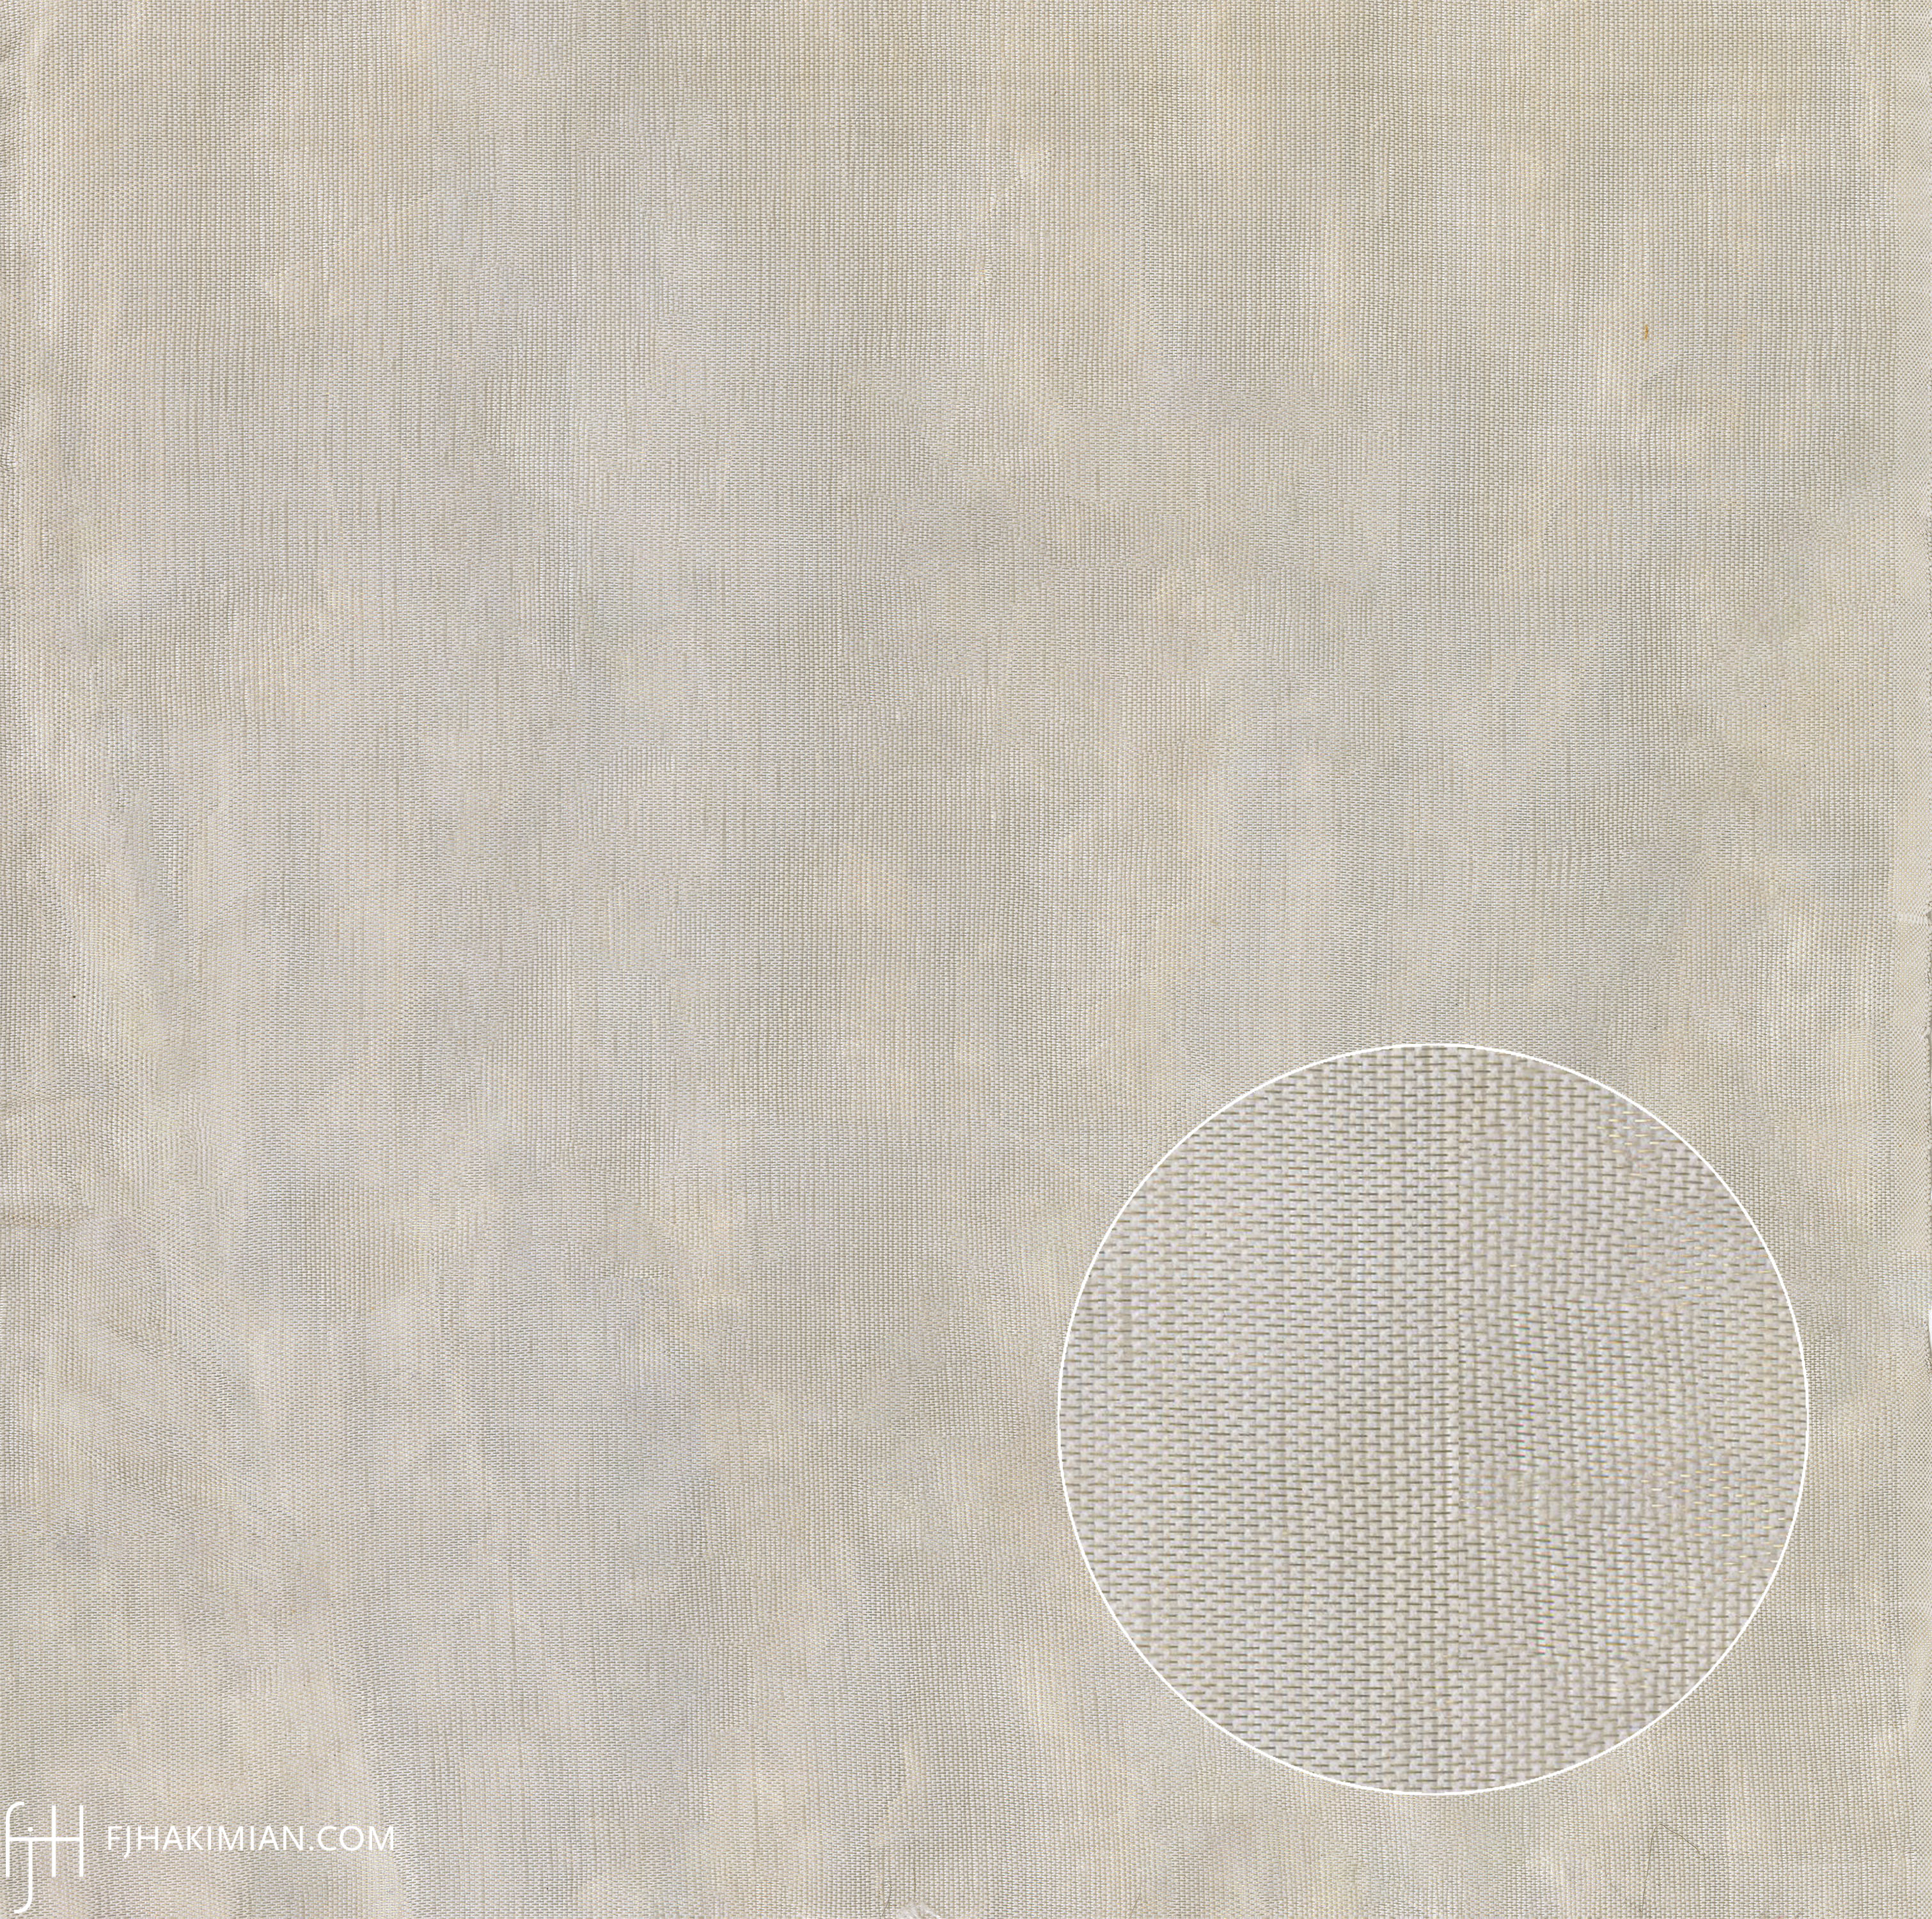 TO-Light Plain Copper Cotton Sheer Fabric | FJ Hakimian Carpet Gallery, New York 